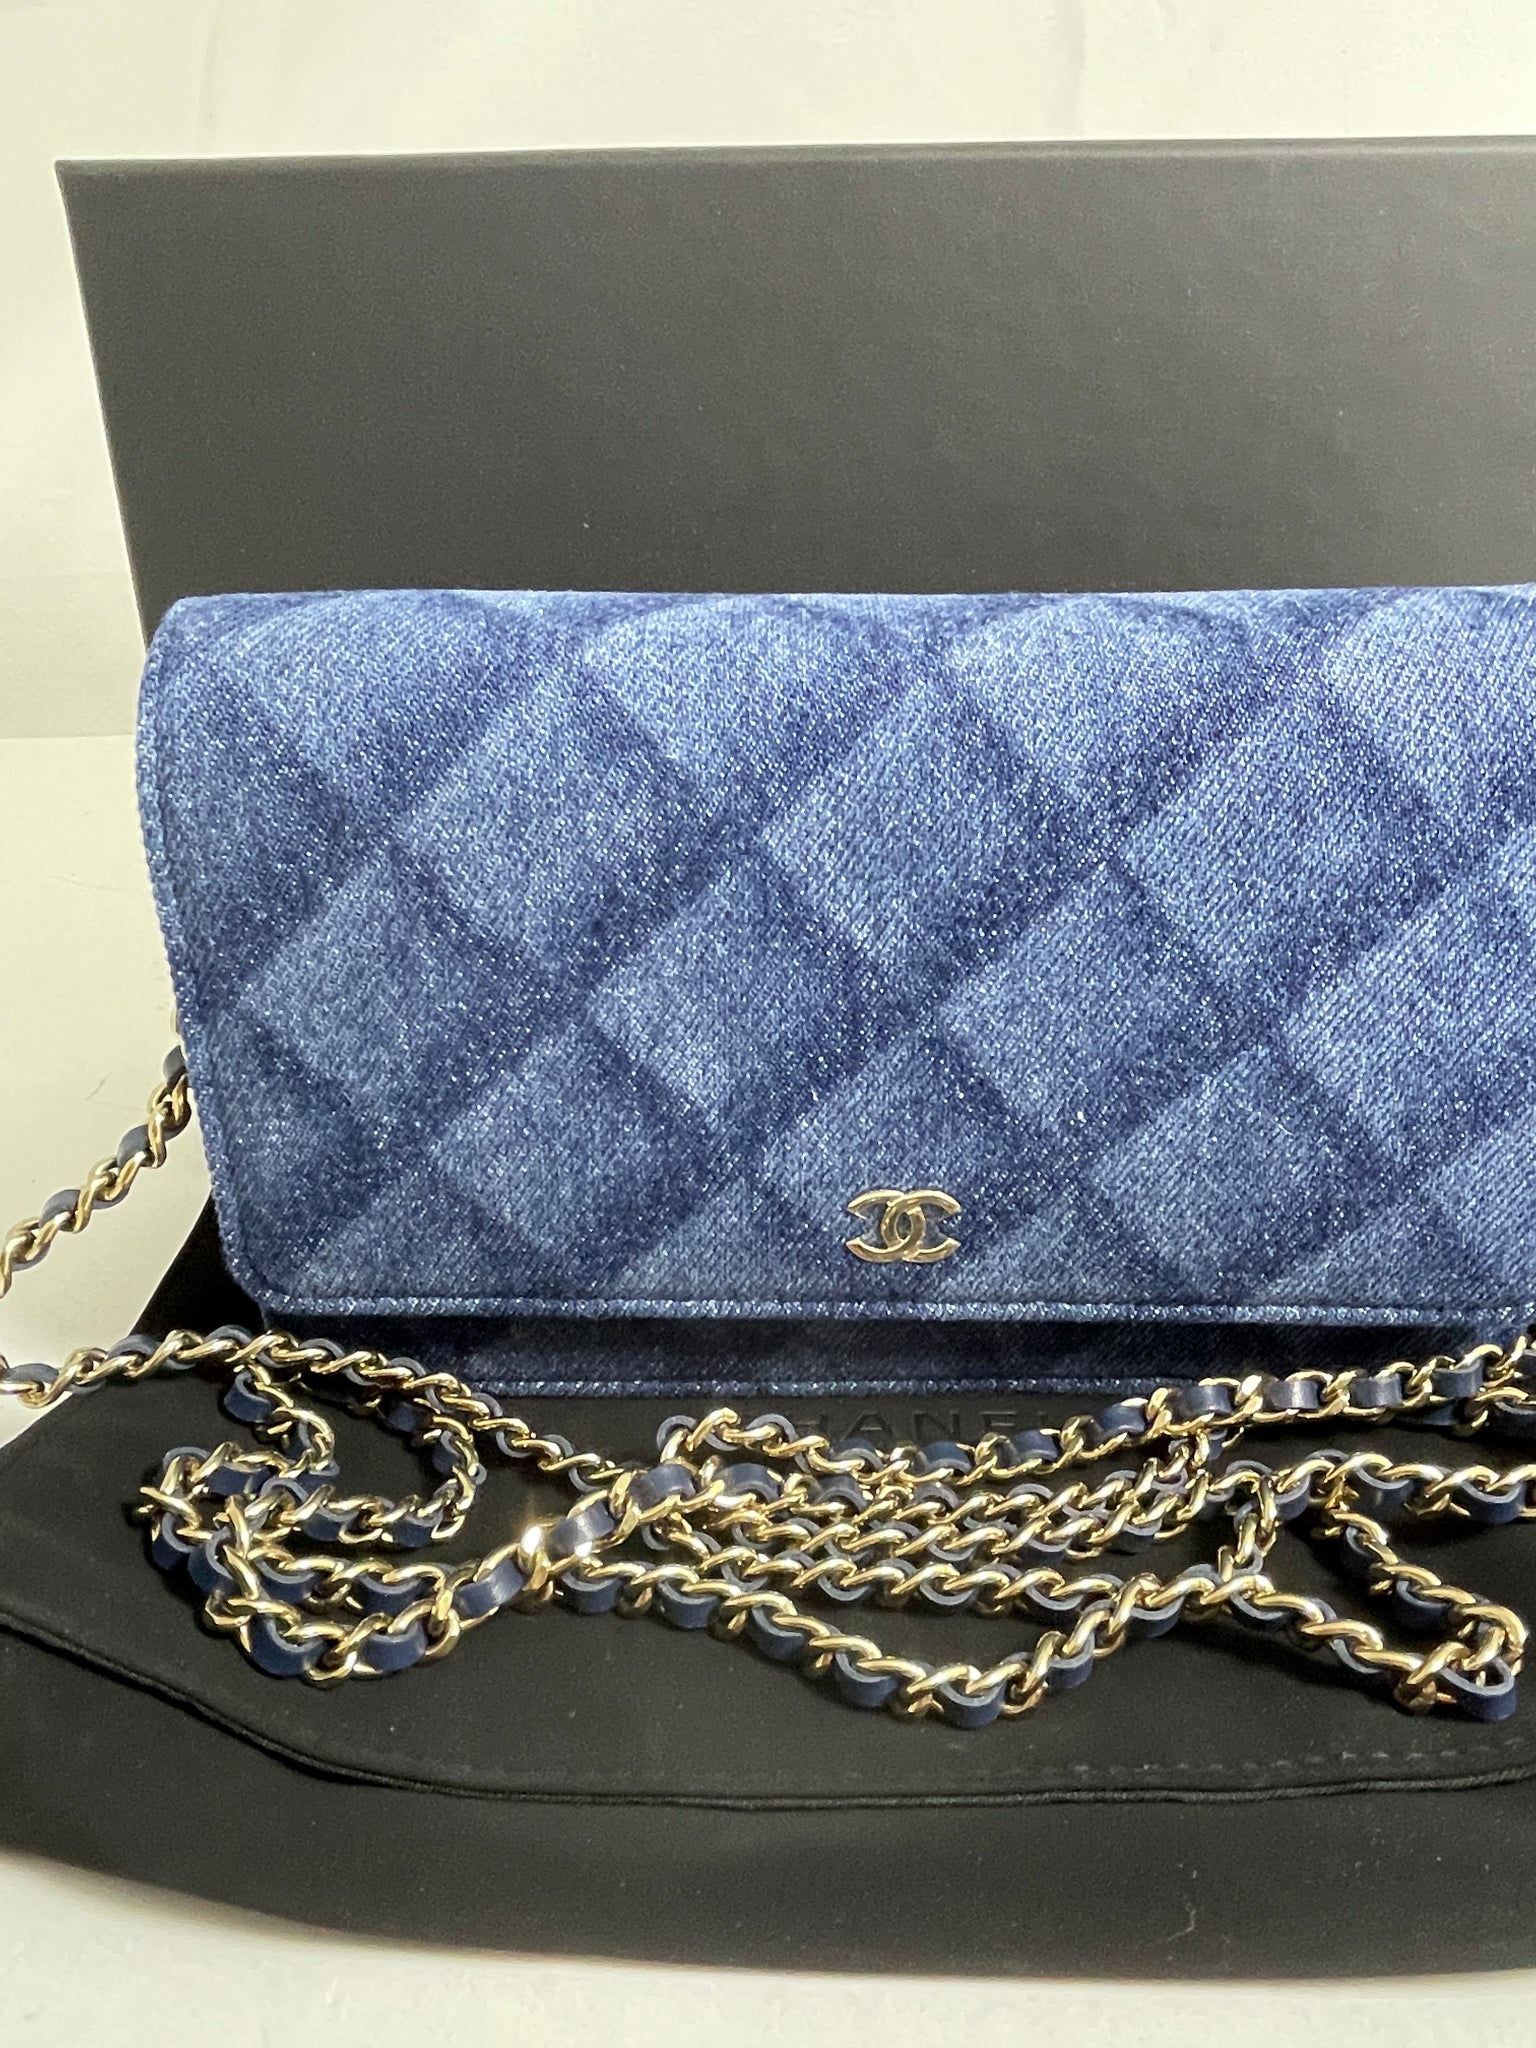 Chanel Classic Denim WOC Wallet On Chain Handbag